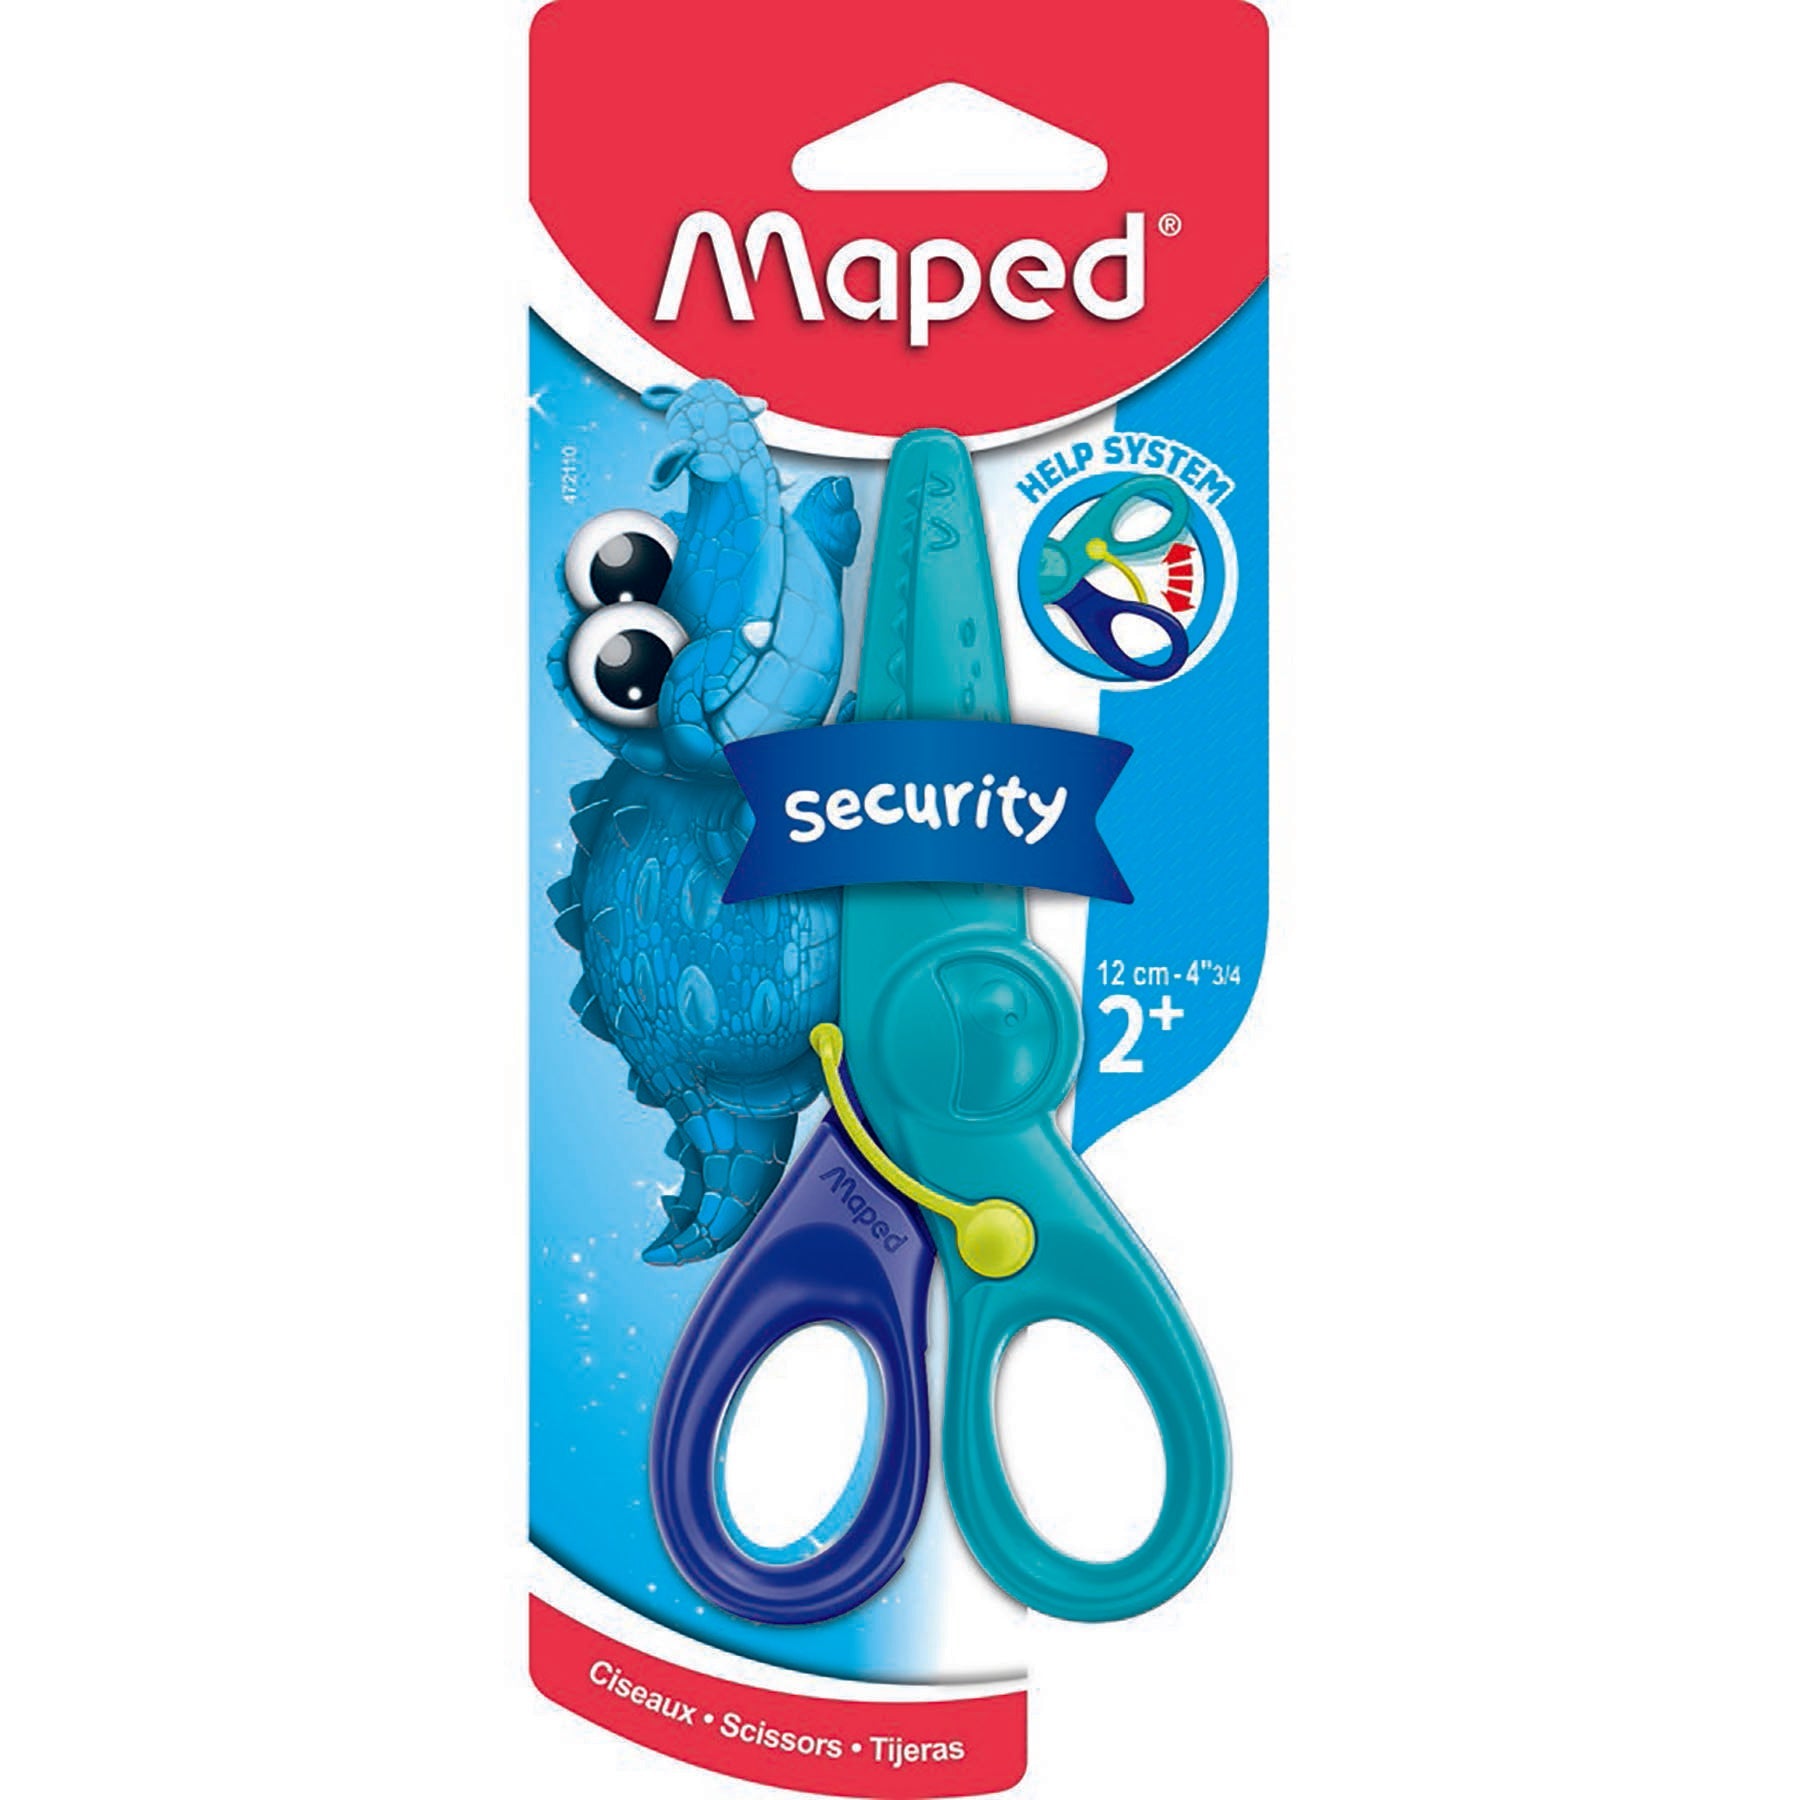 Maped Kids Security Scissors 4.75in